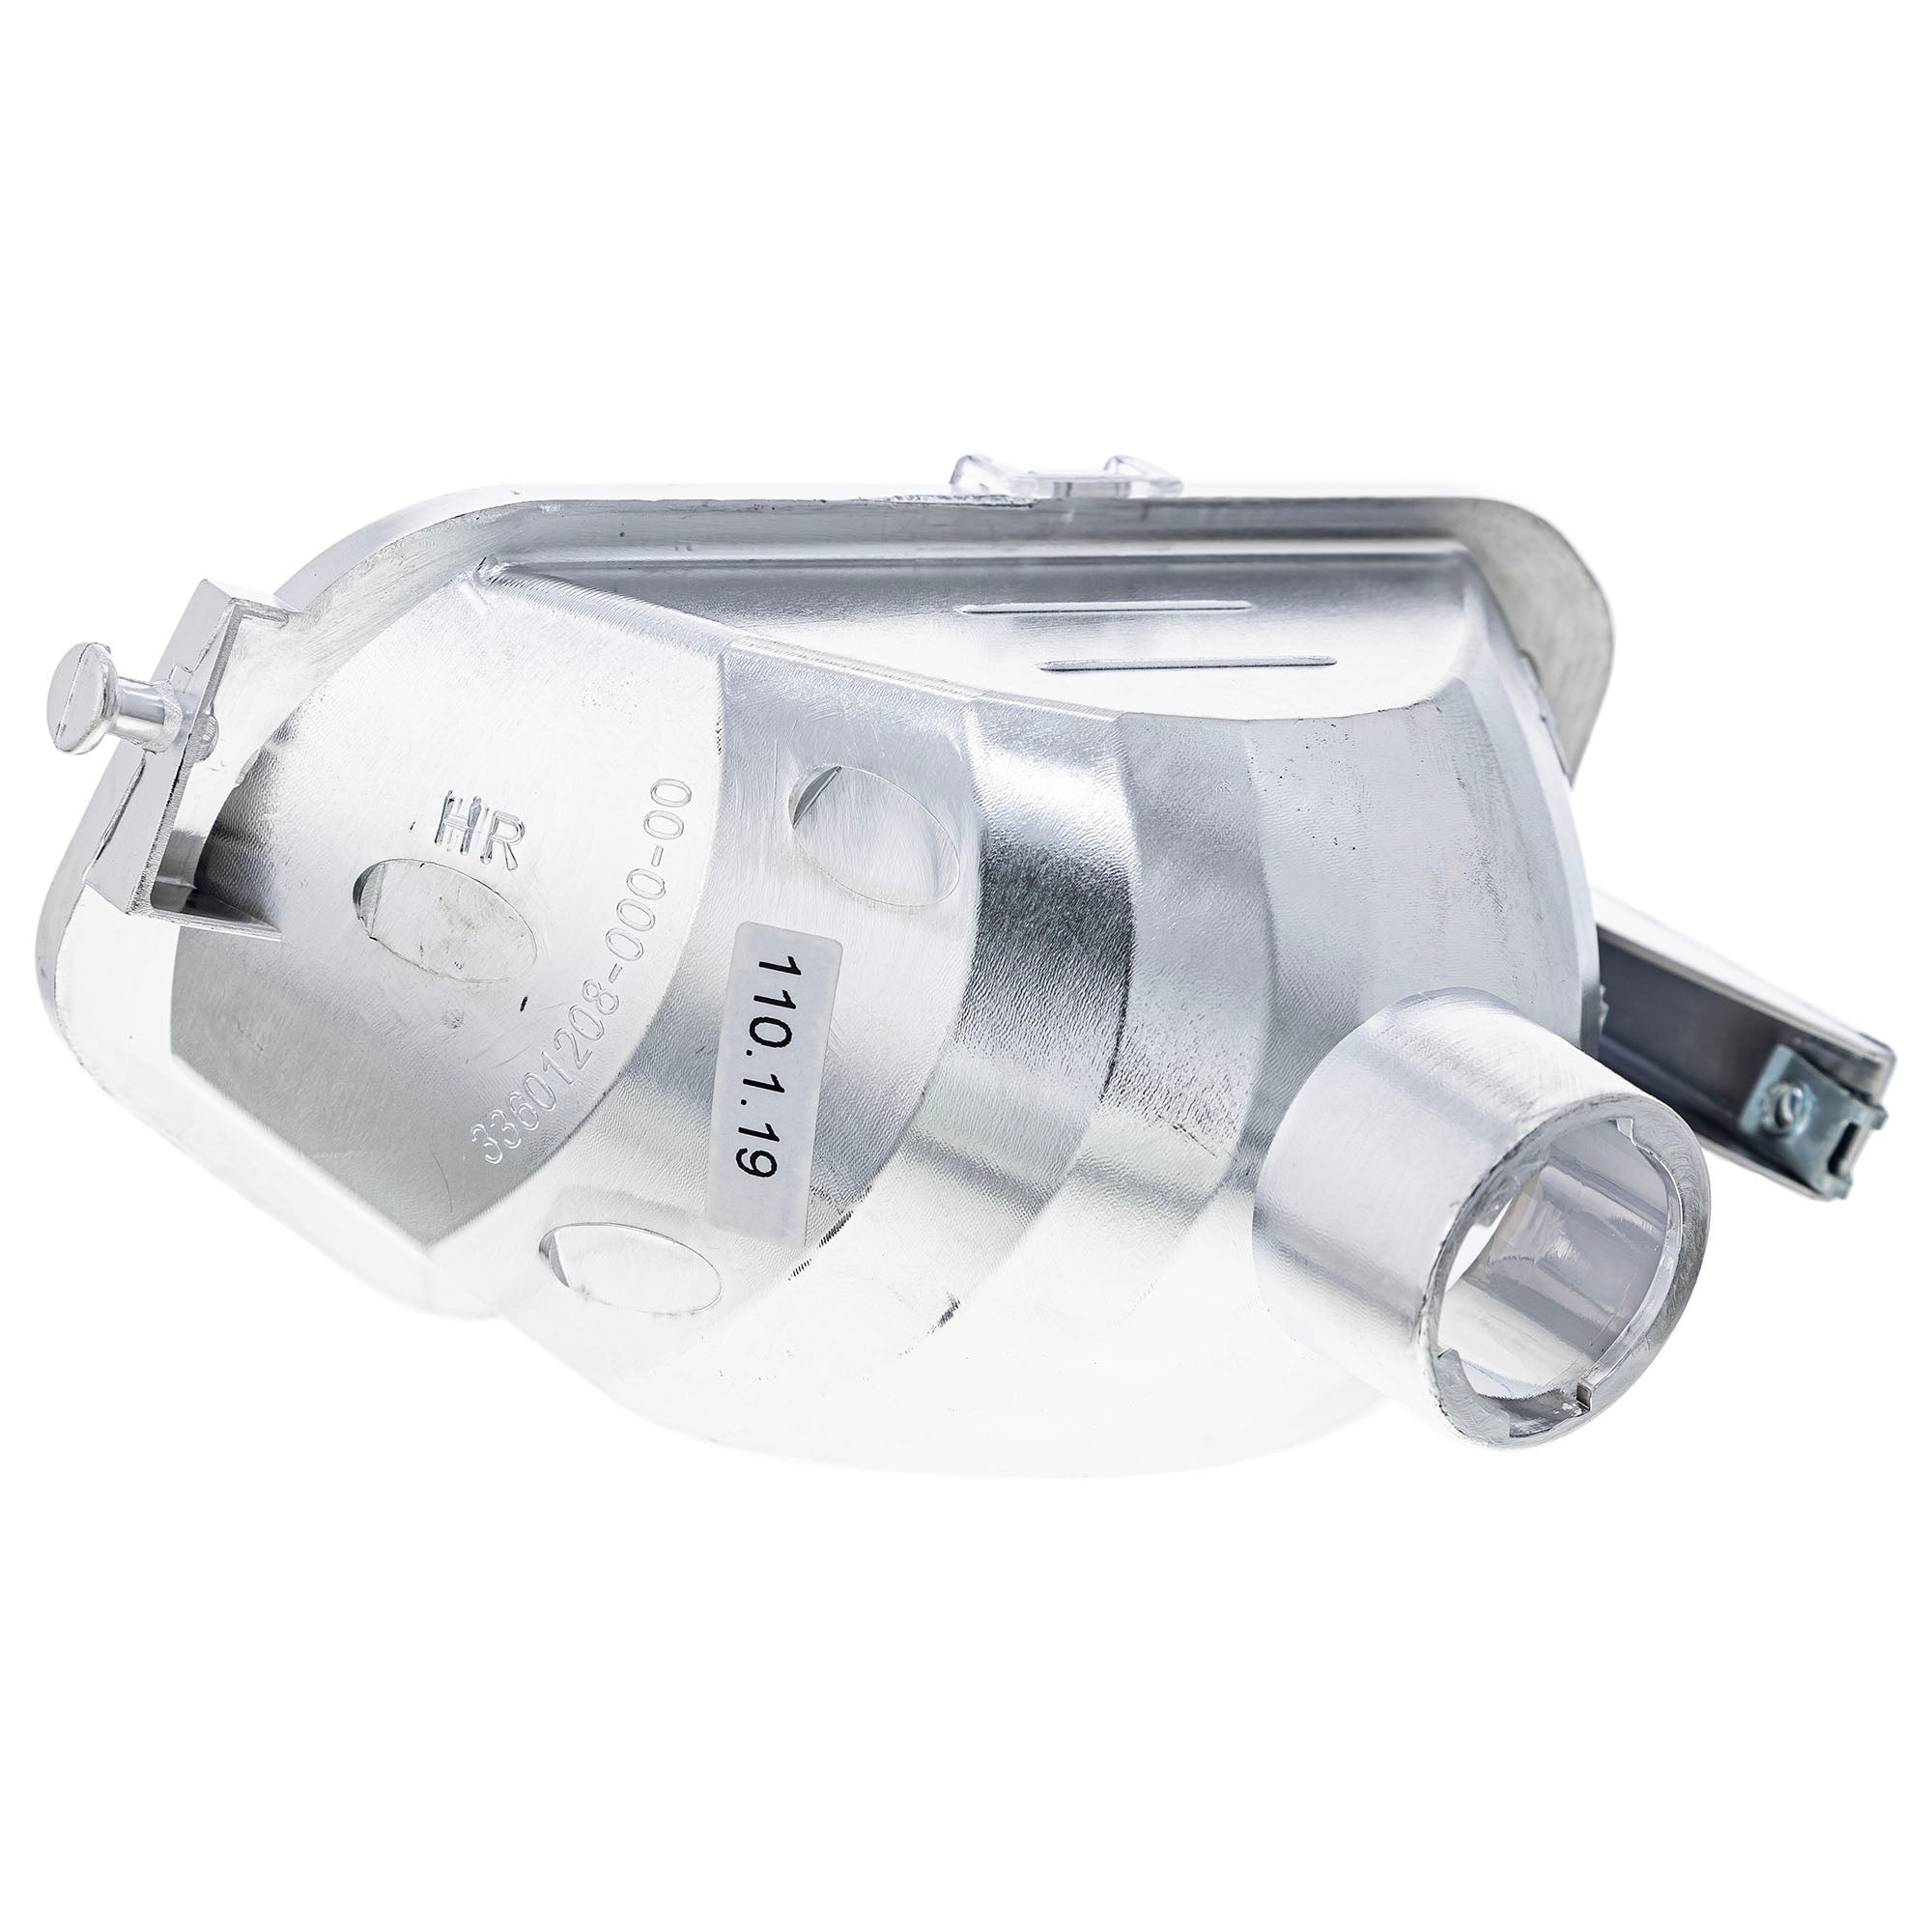 Polaris 0454291 Right Hand Headlight Assembly For 2009-2019 RZR 200 170